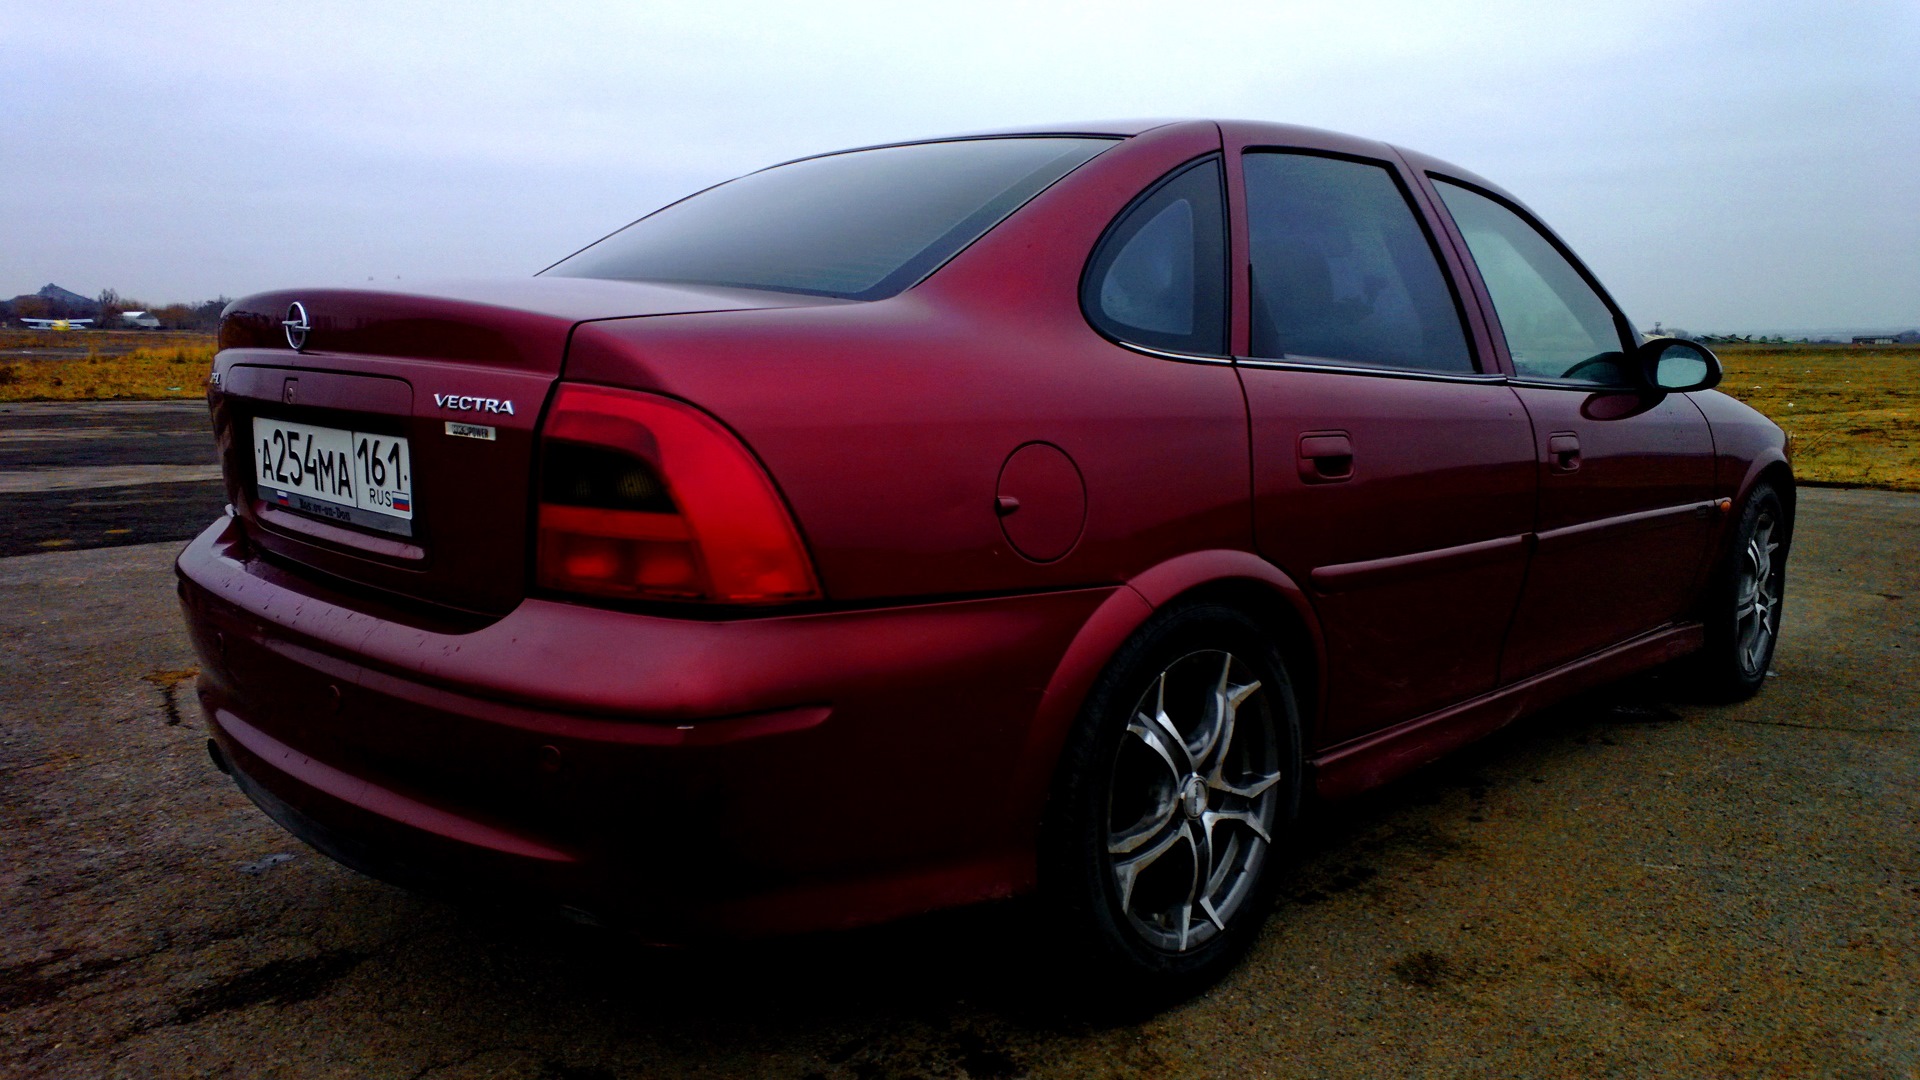 2001 Opel Vectra b 2.2. Опель Вектра б Вишневая. Опель Вектра б красный. Opel Vectra b бордовая.